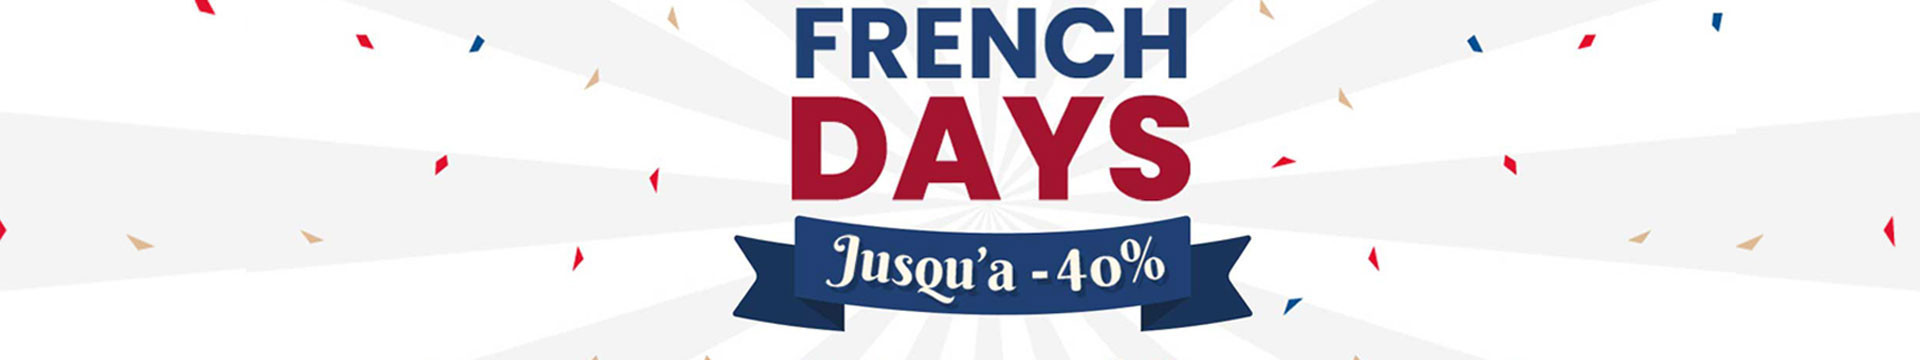 French Days -10%